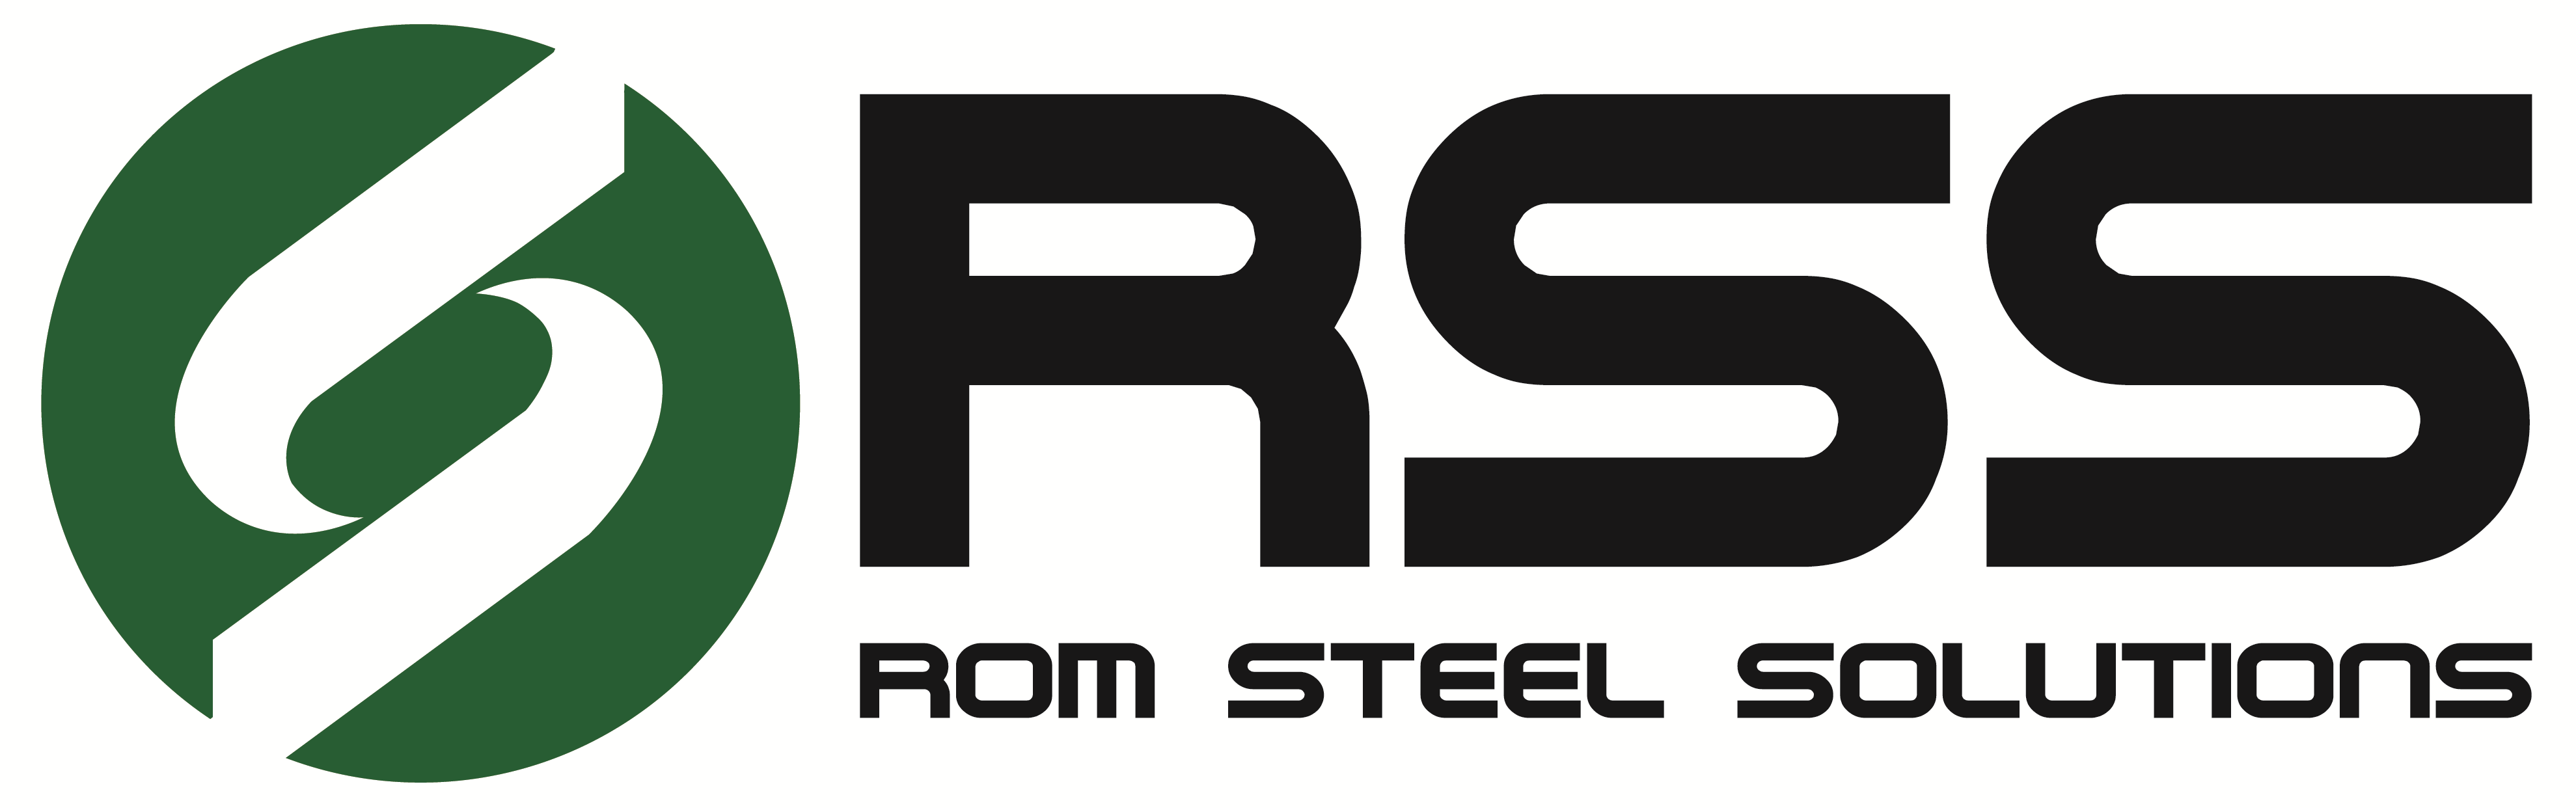 Steel Solutions